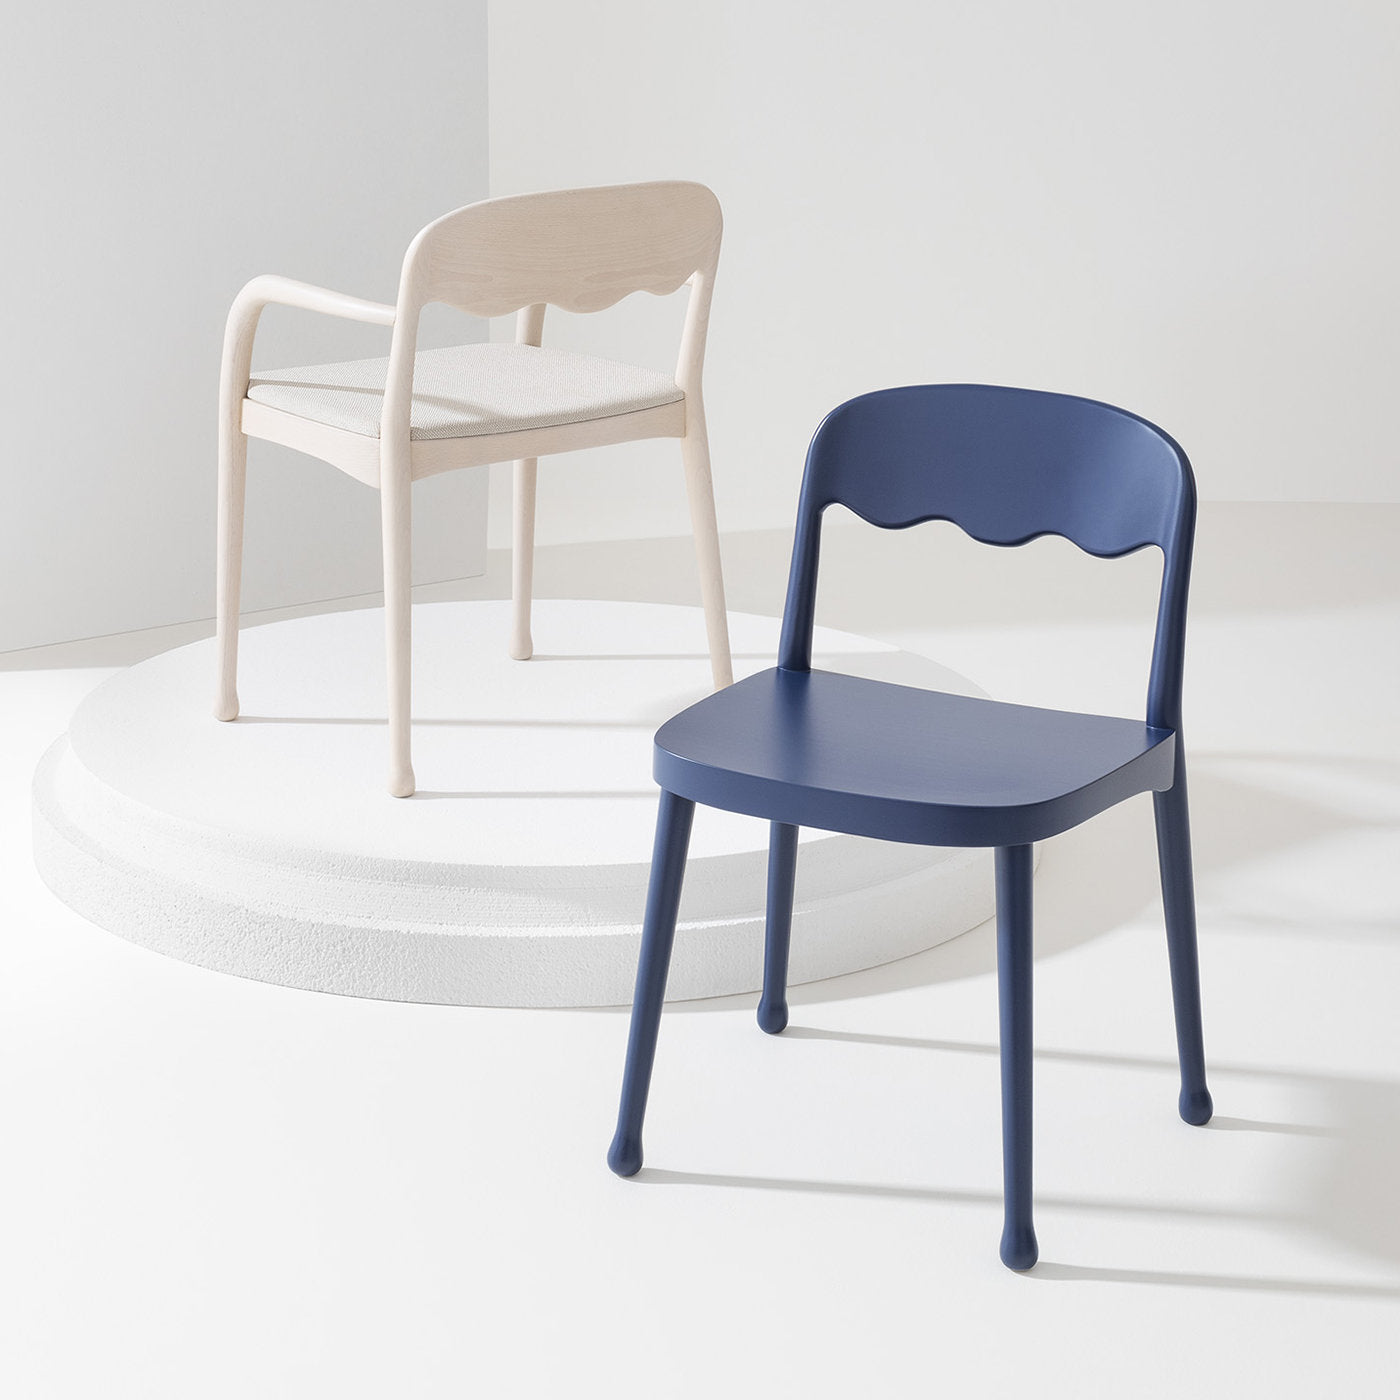 Frisée 250 Blauer stuhl by Cristina Celestino - Alternative Ansicht 1